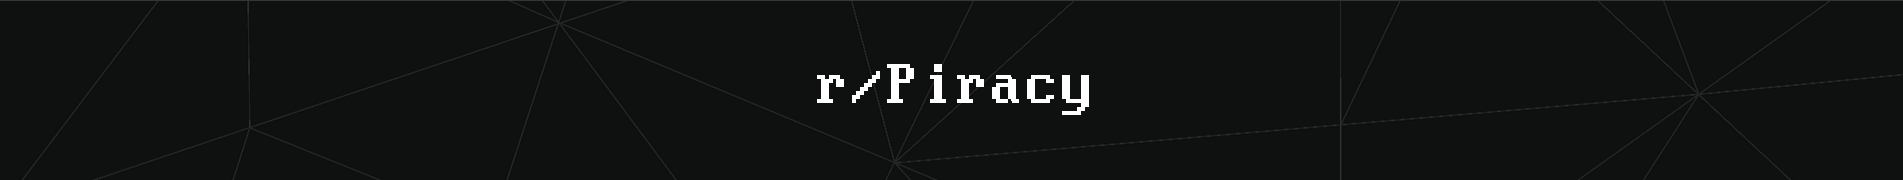 pirate windows 10 reddit